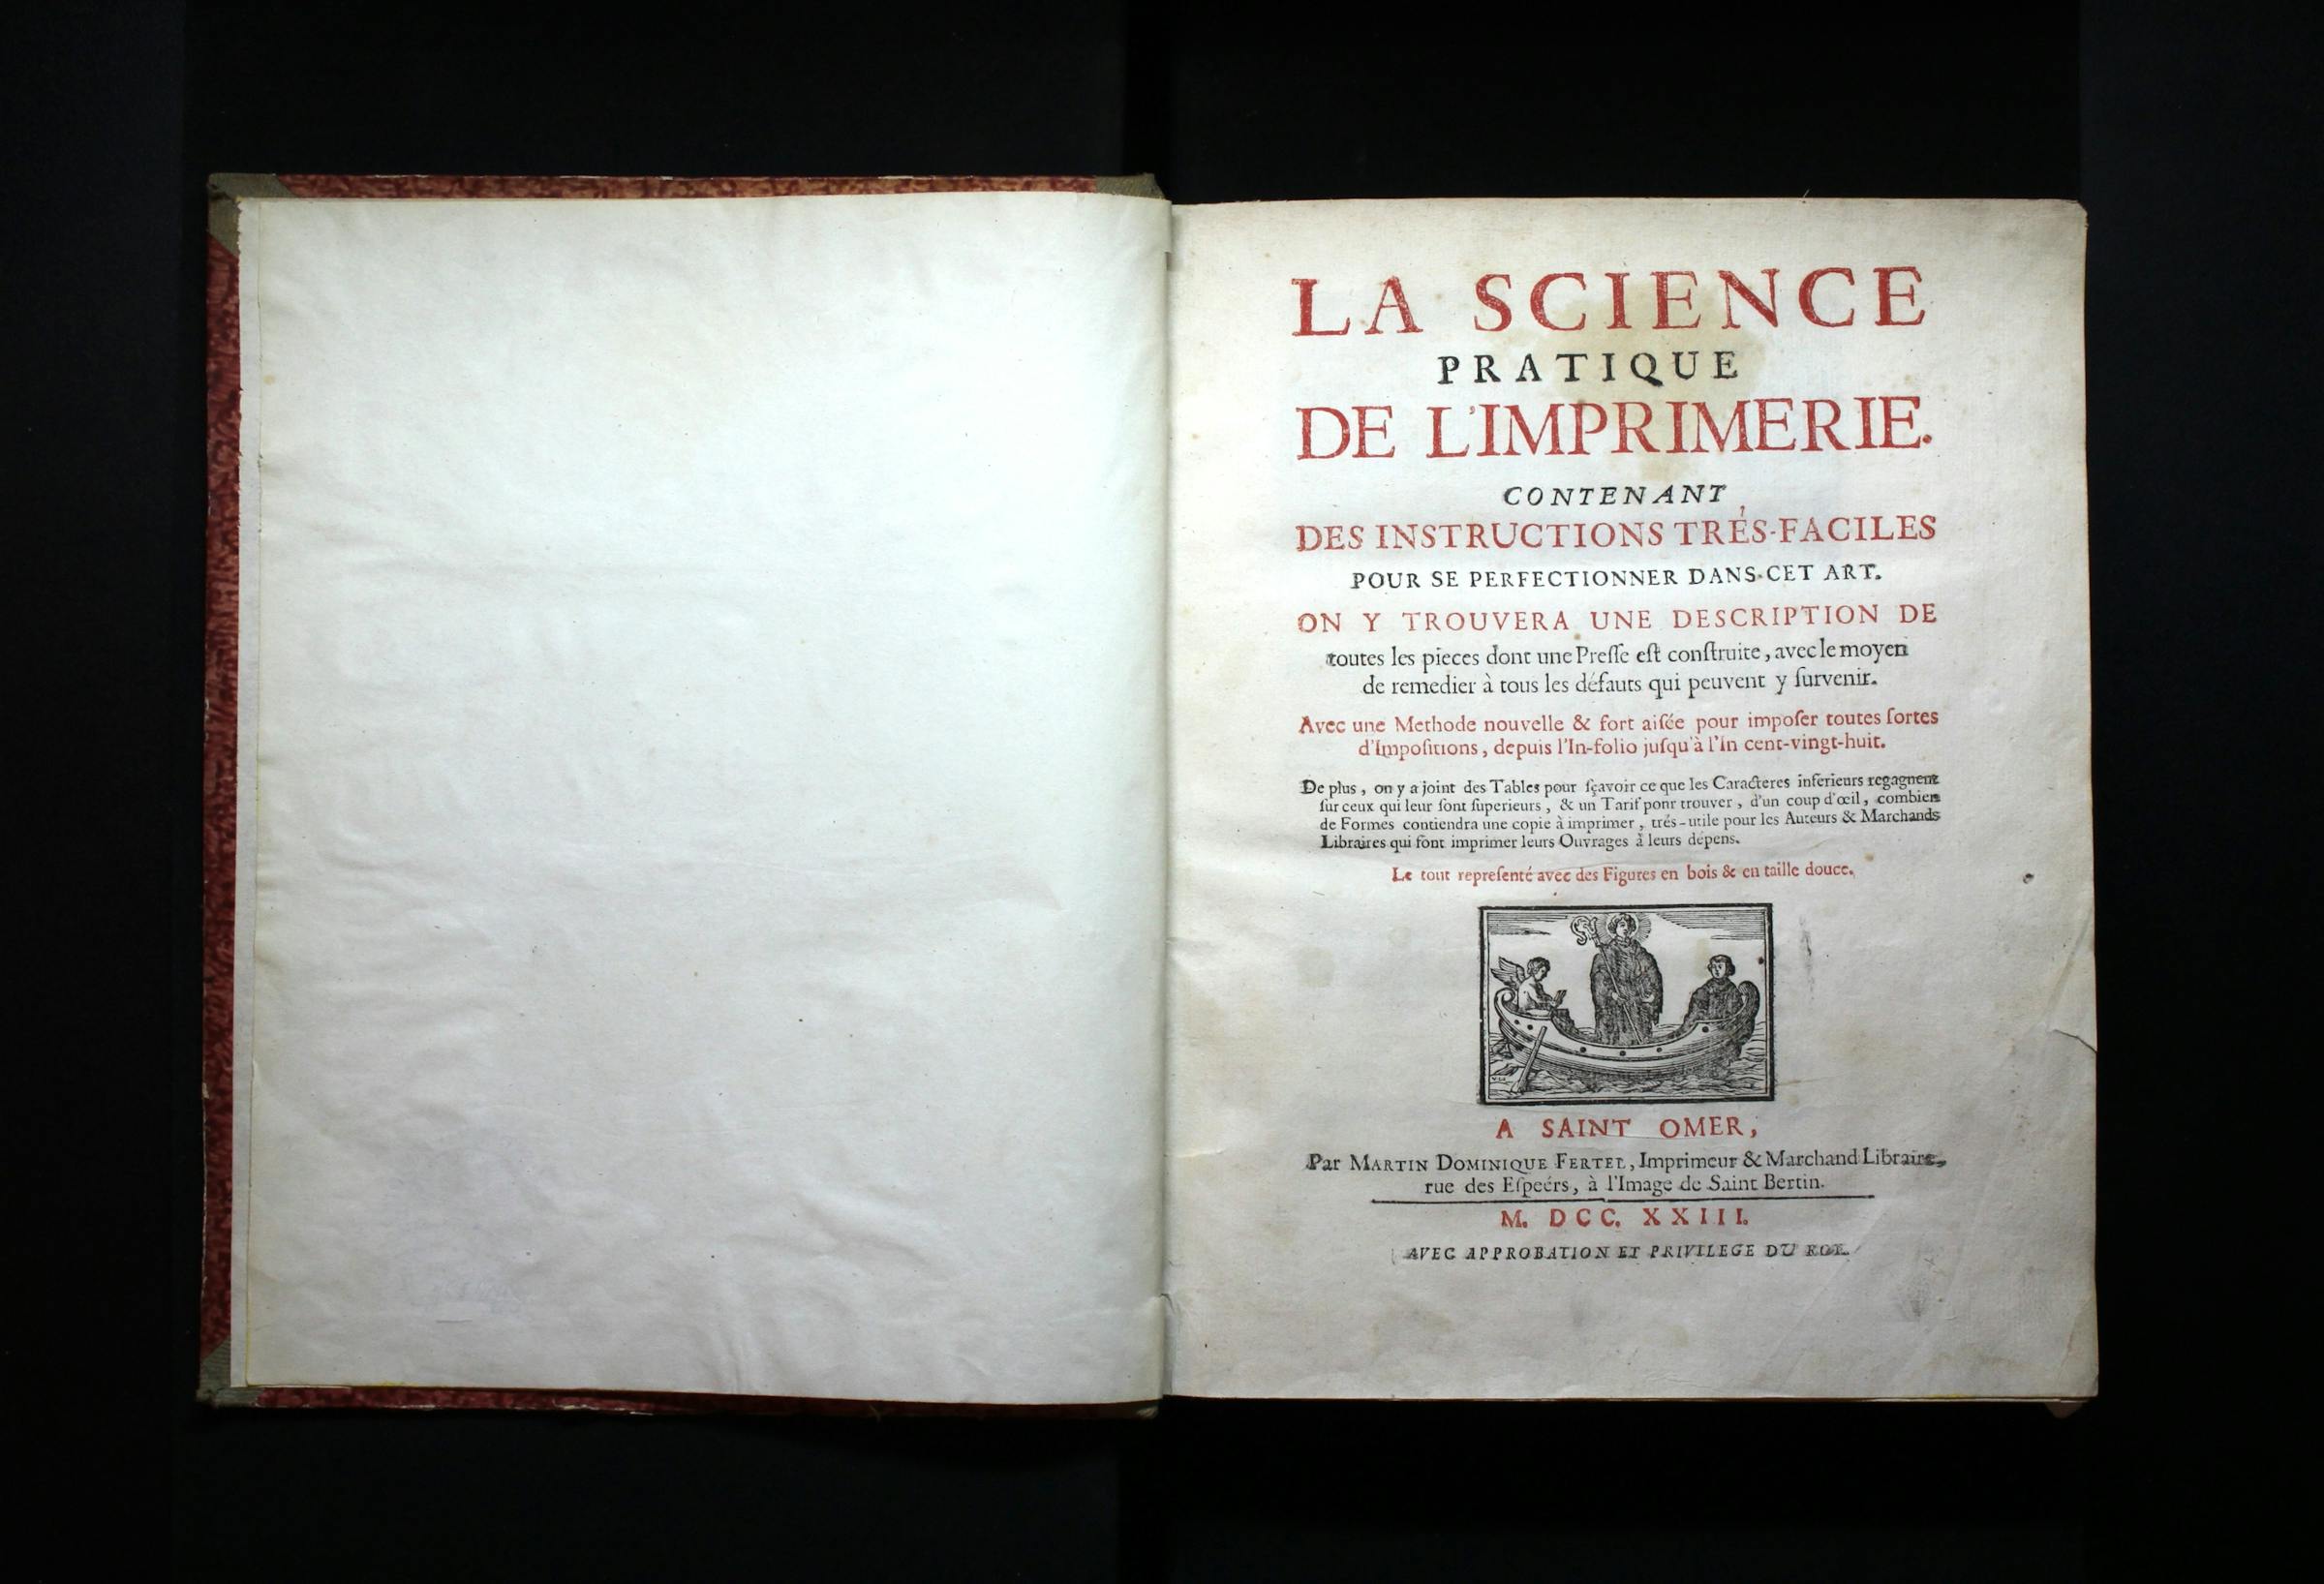 Fertel’s La Science pratique de l’imprimerie: the first French treatise on typography